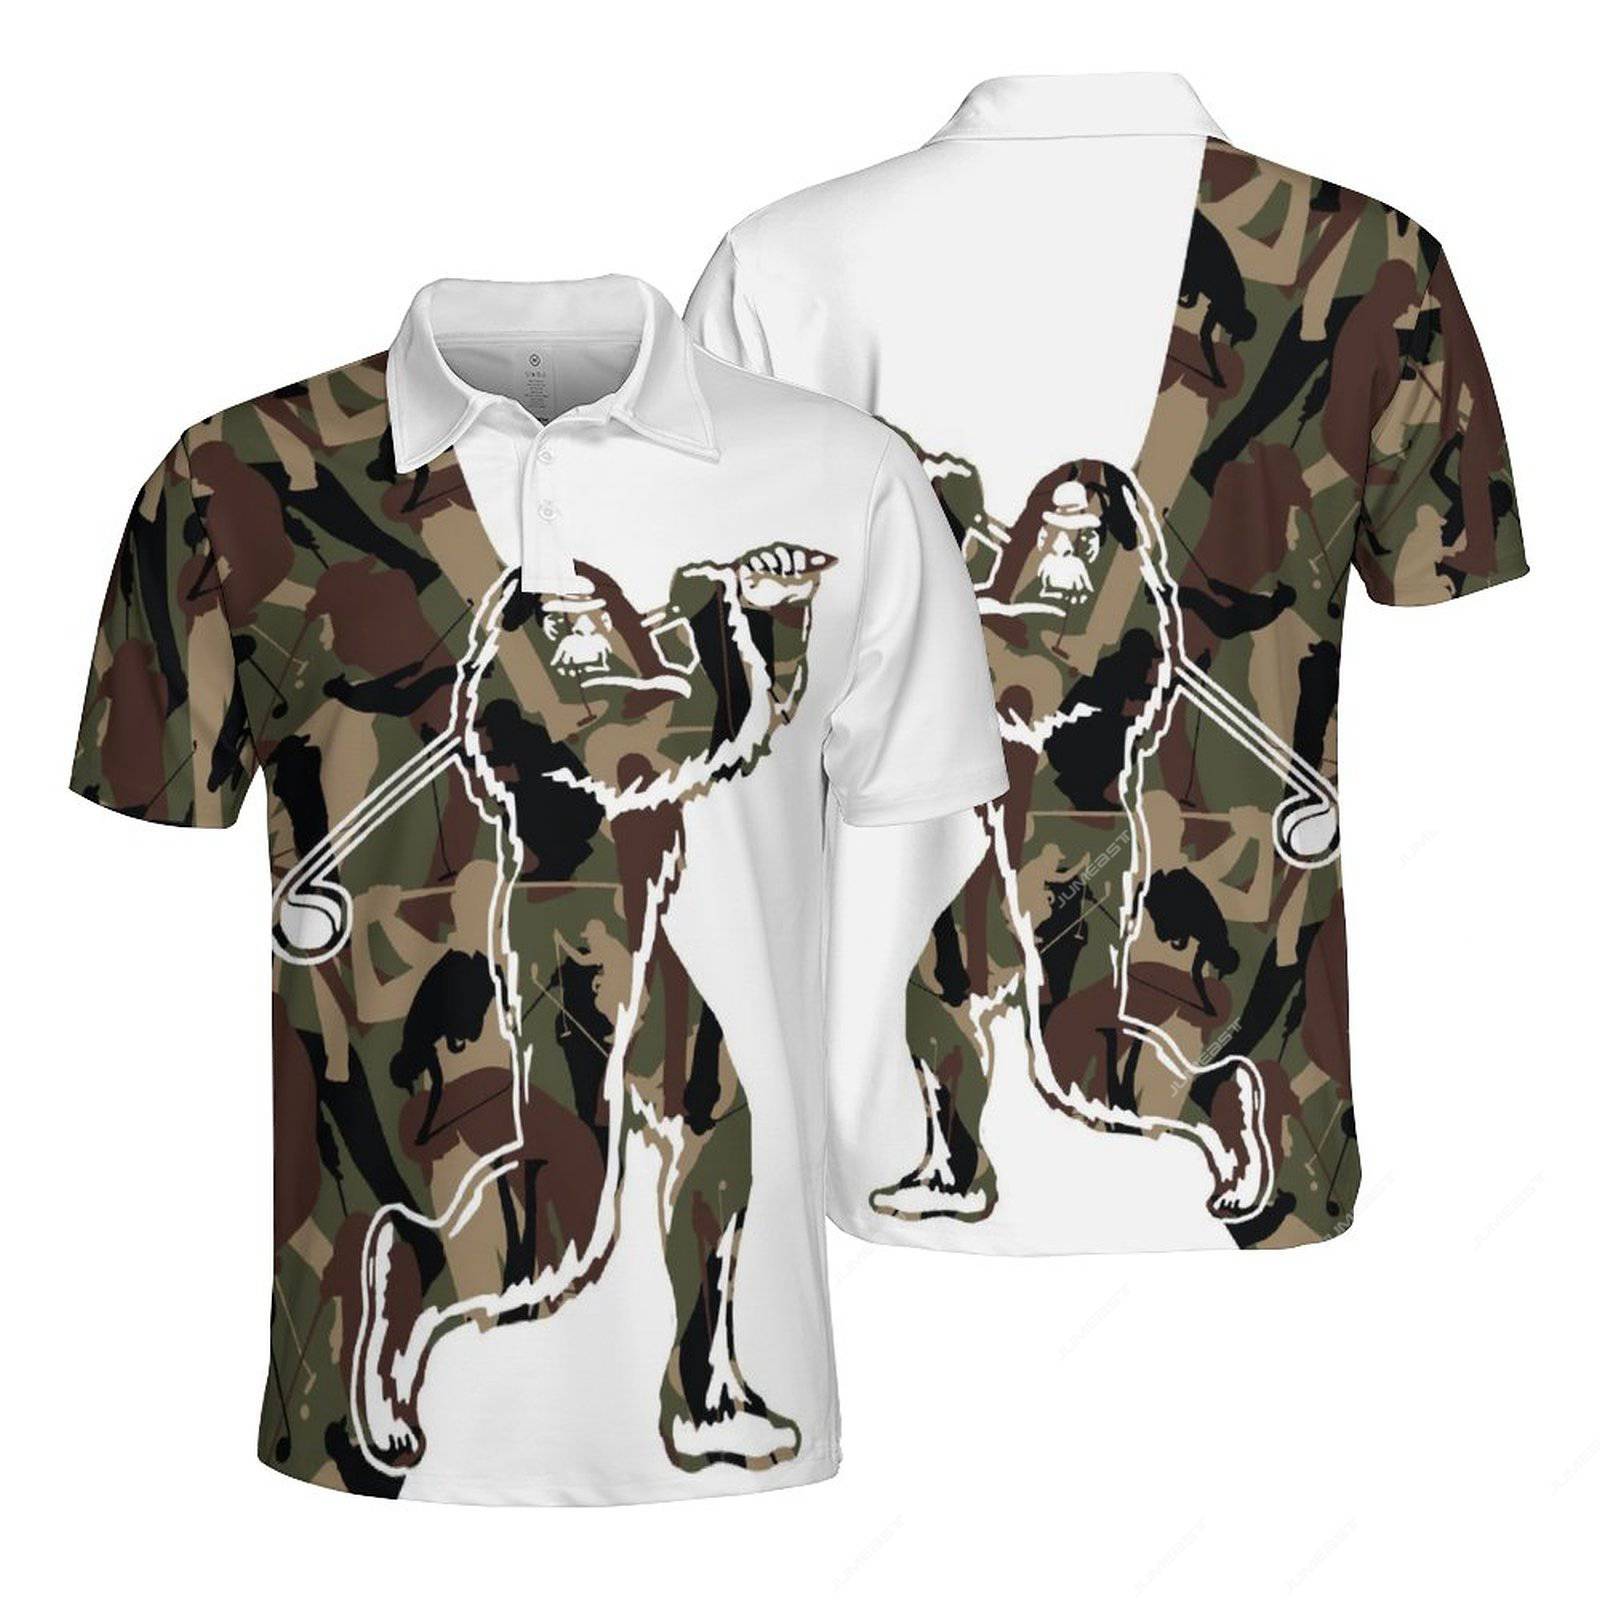 Jumeast Golf Men Camo Polo Shirt Honting Camouflage Soft Mesh Tシャツミリタリーライトアカデミアトレーニング若々しい活力服